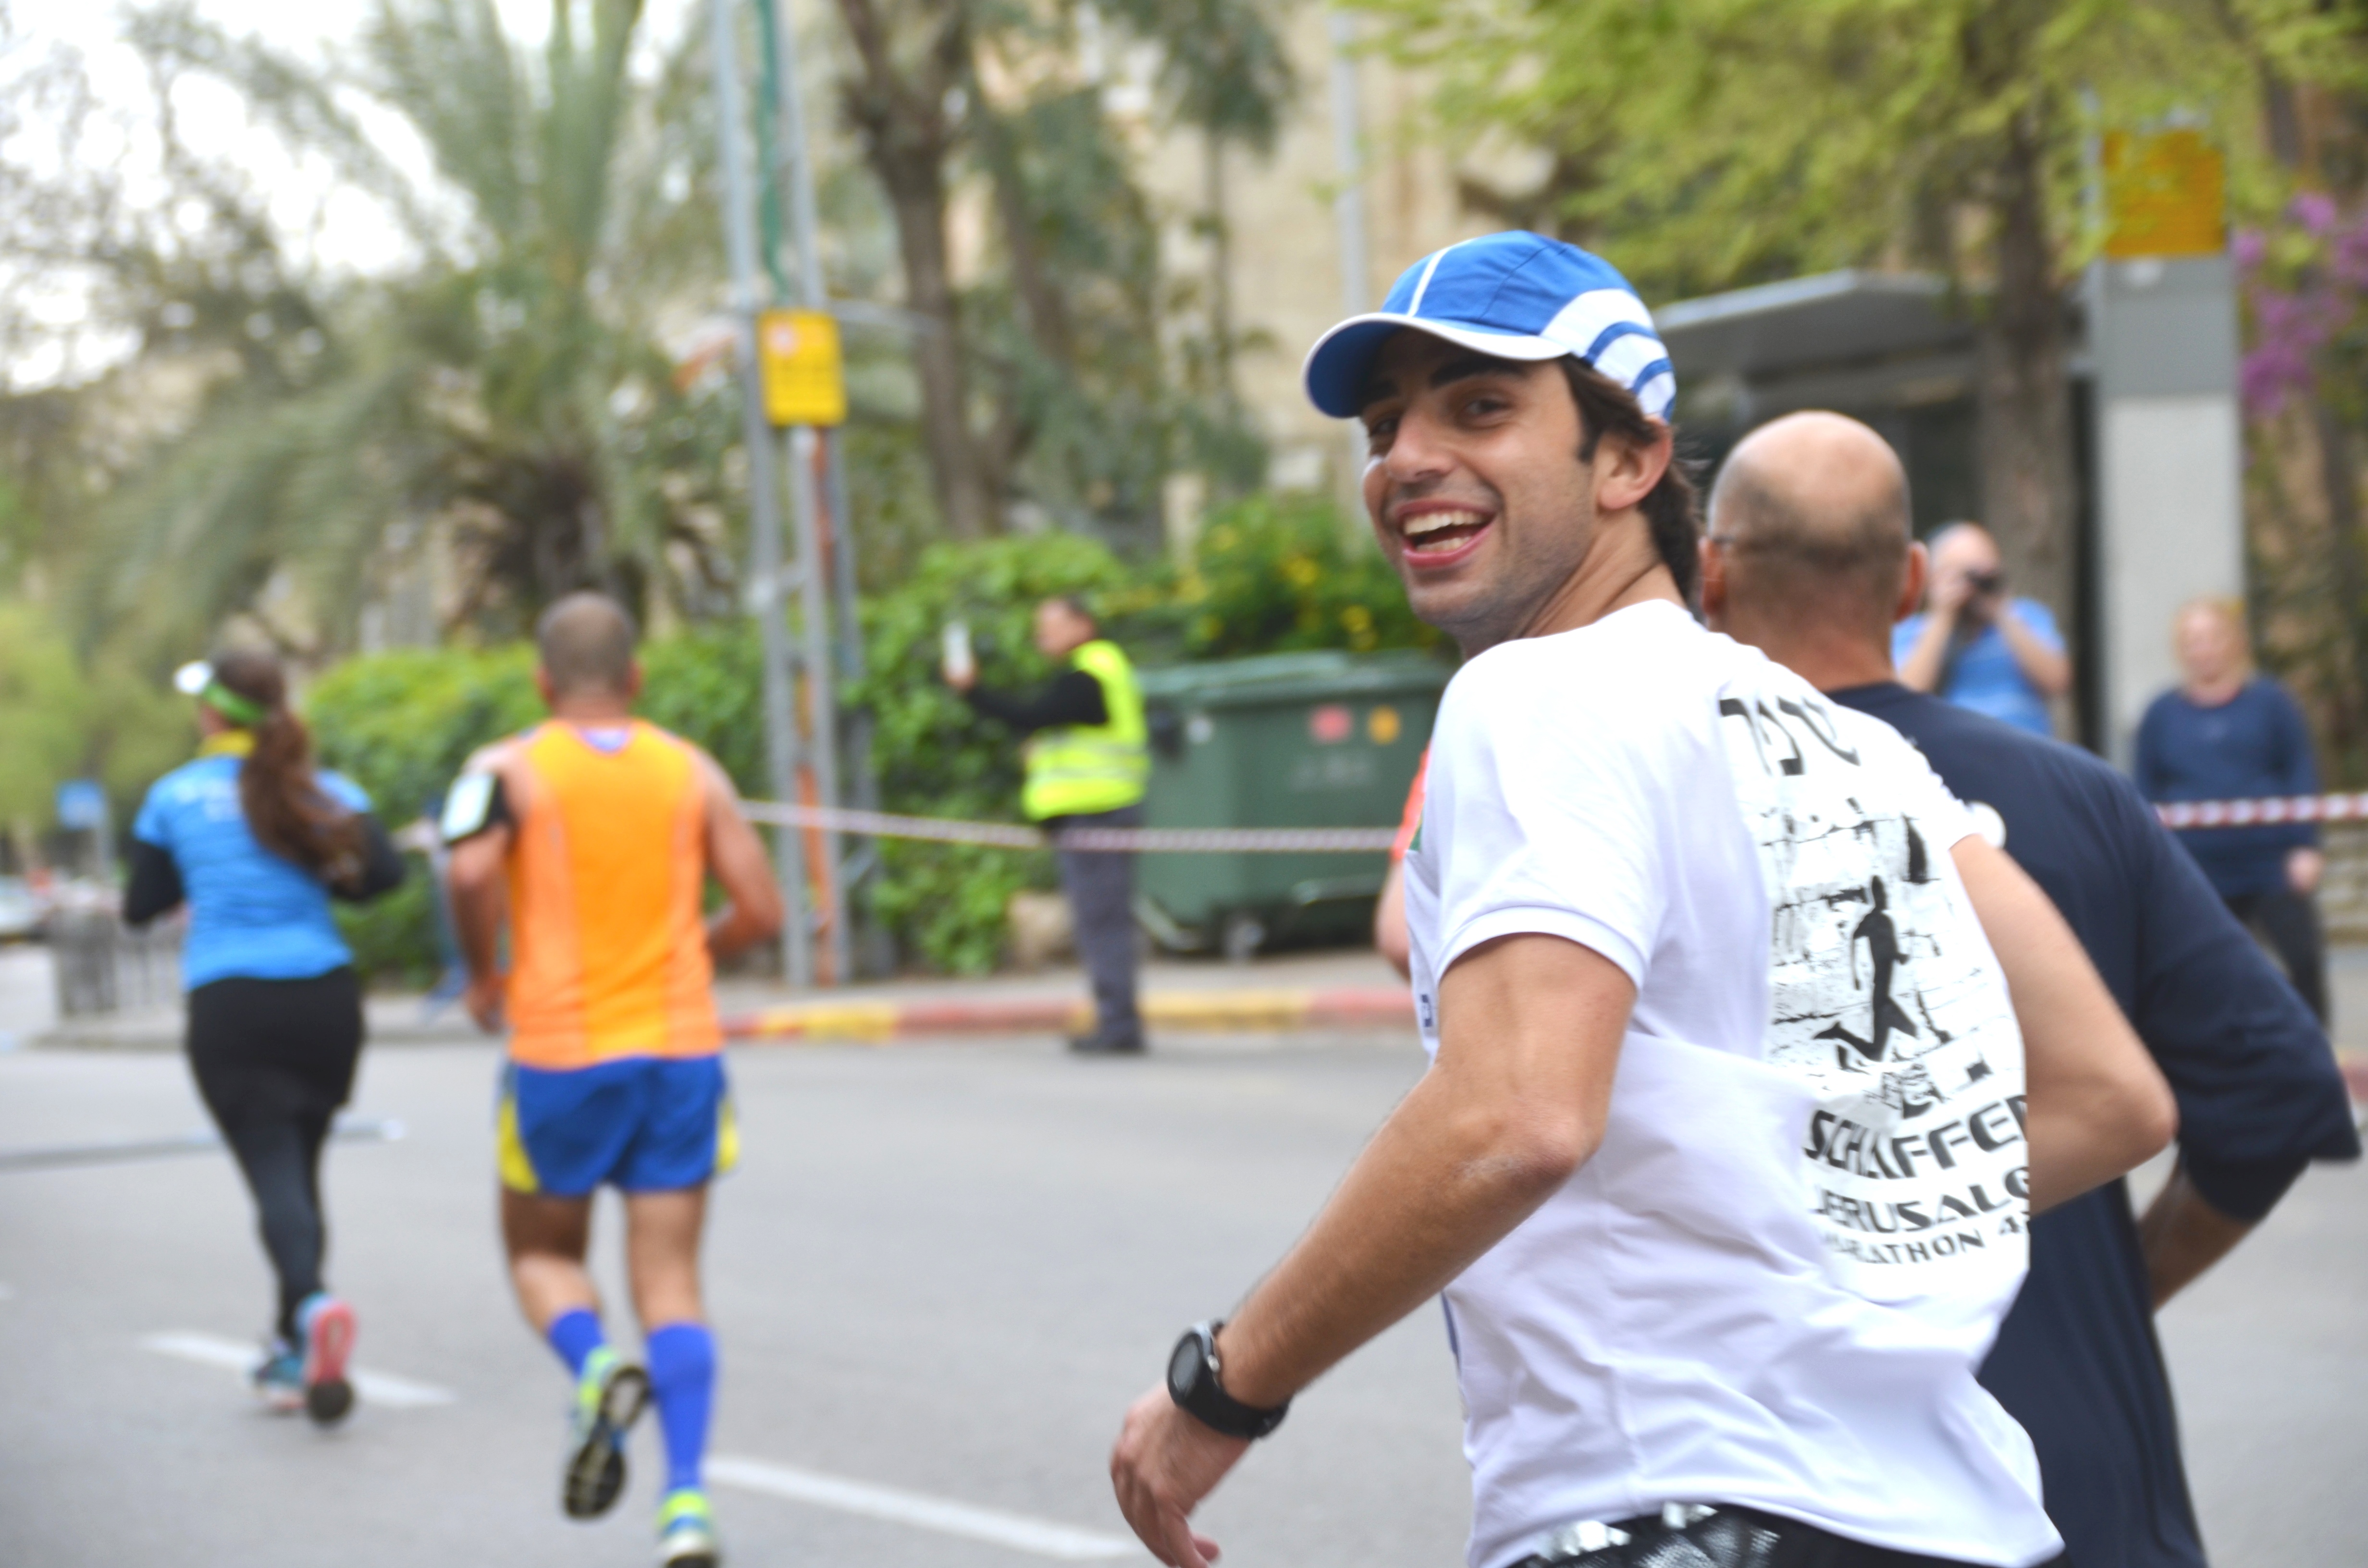 Jerusalem marathon 